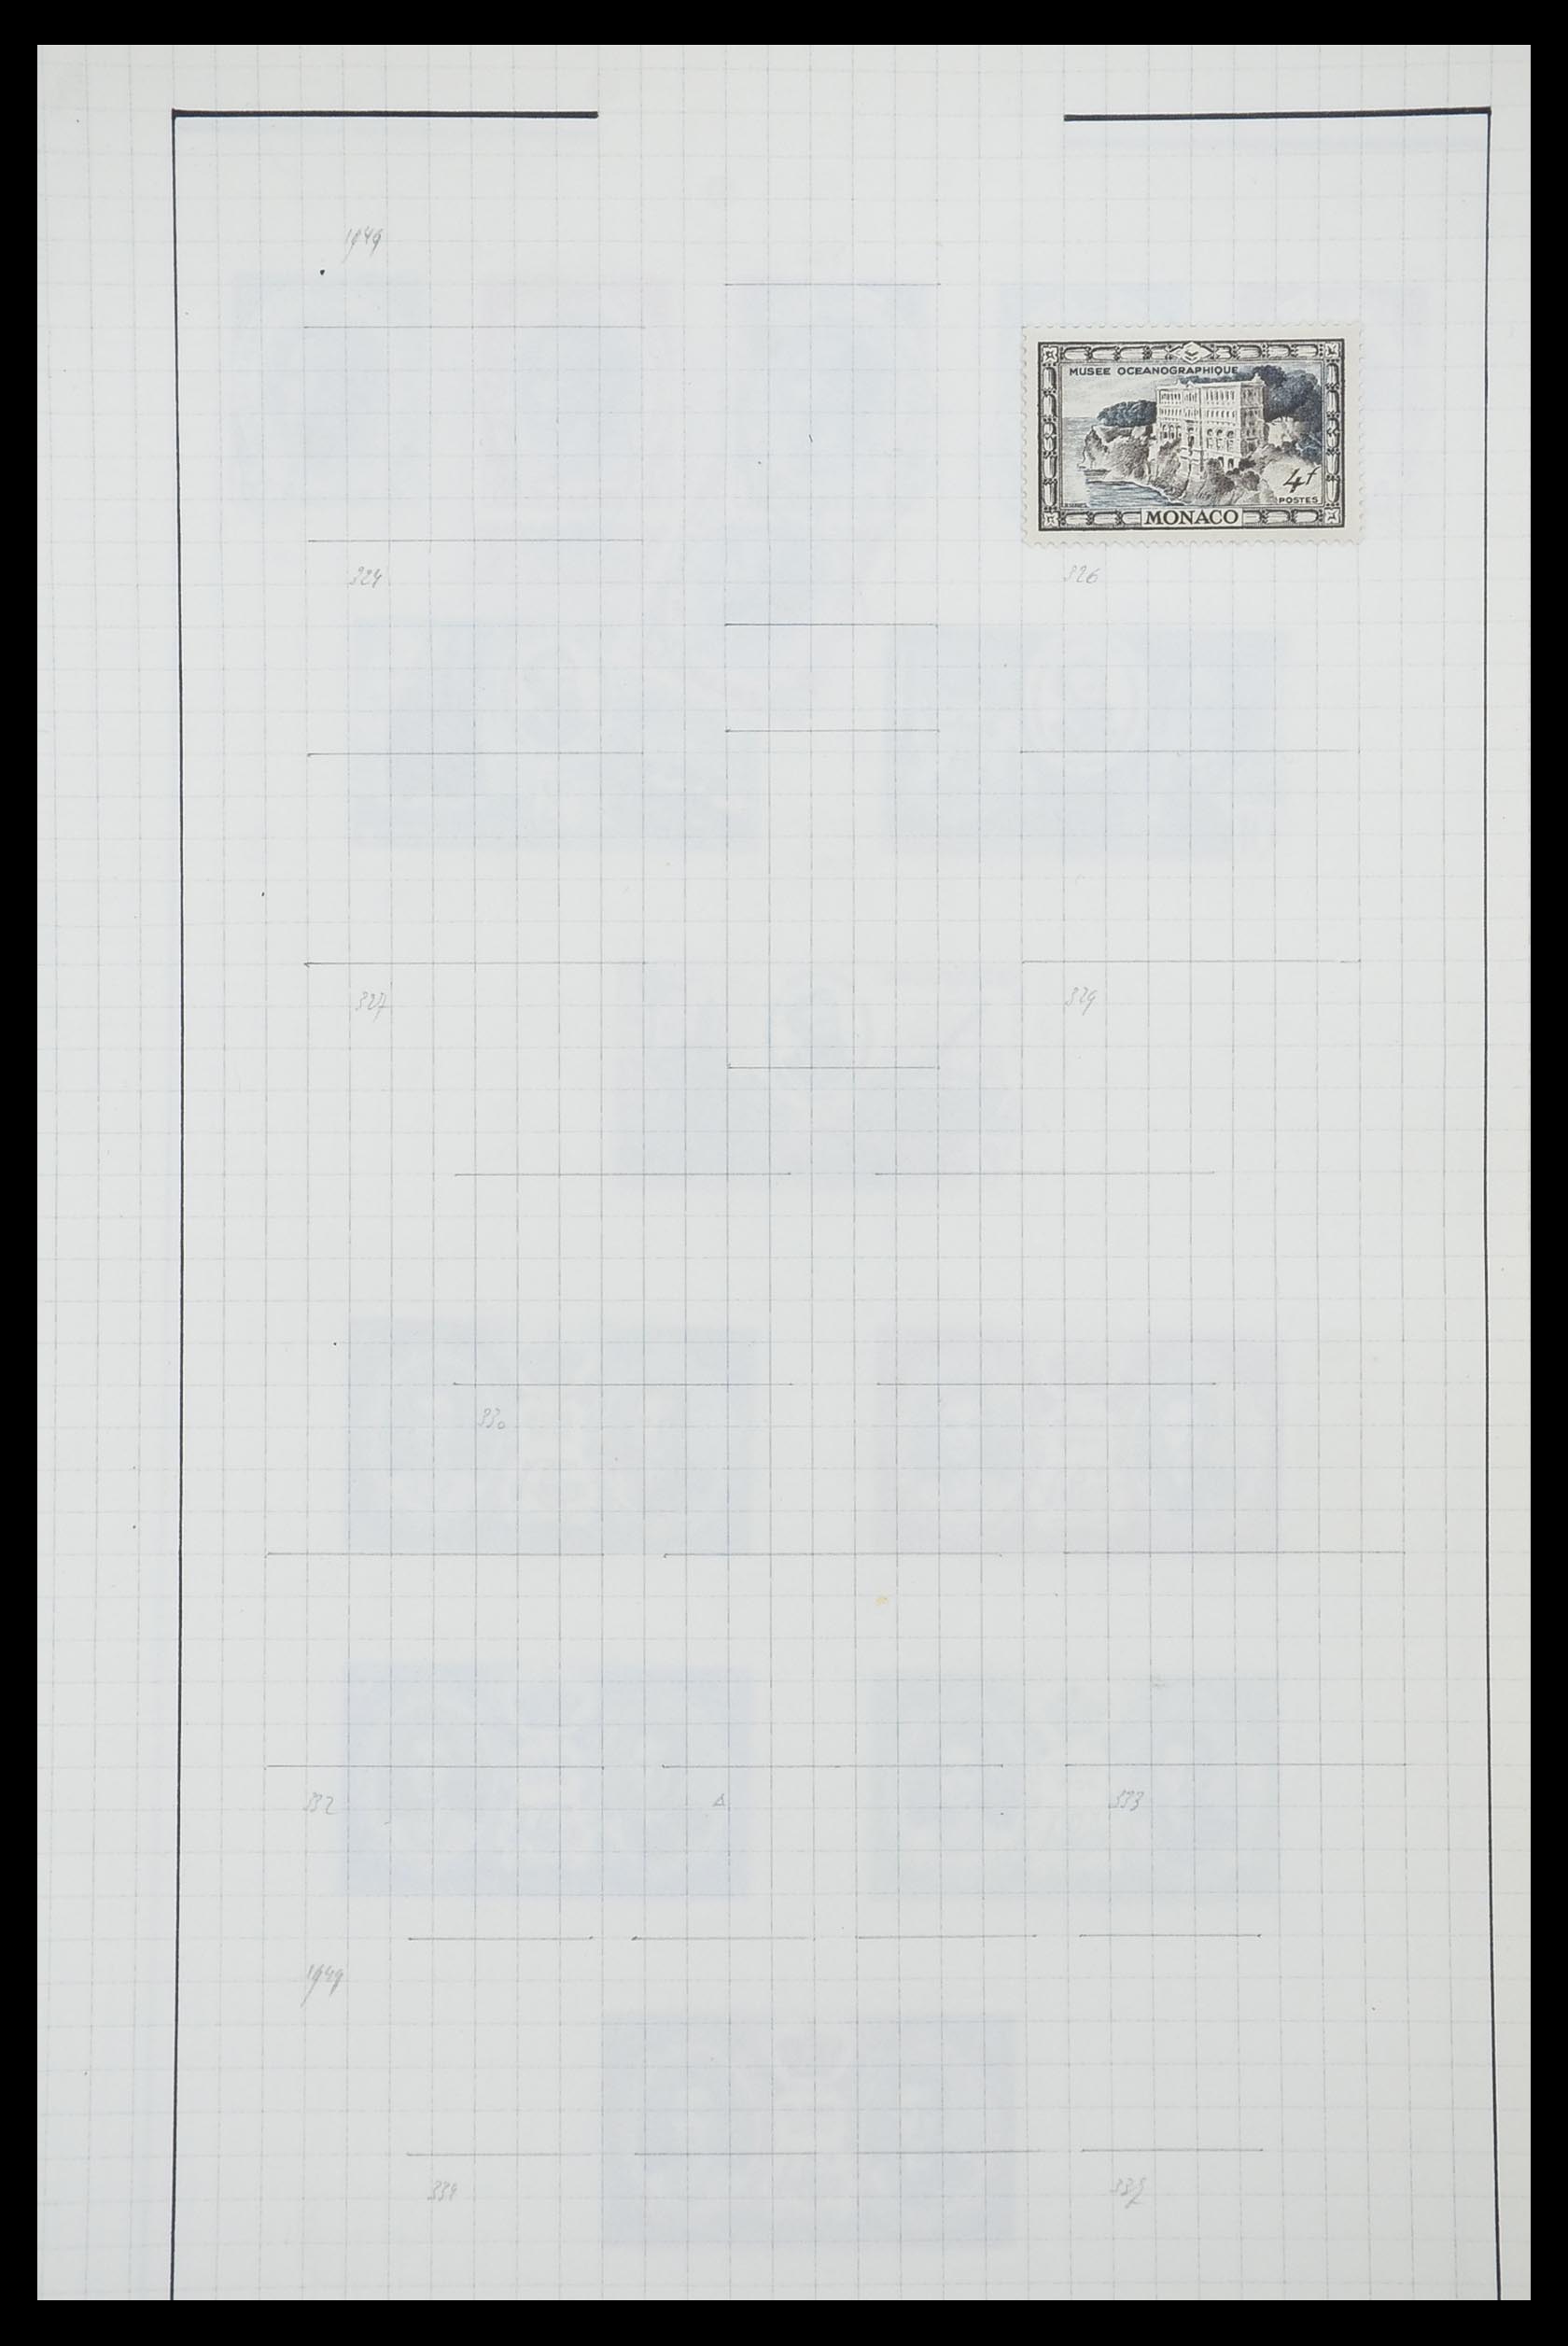 33792 029 - Stamp collection 33792 Monaco 1885-1950.